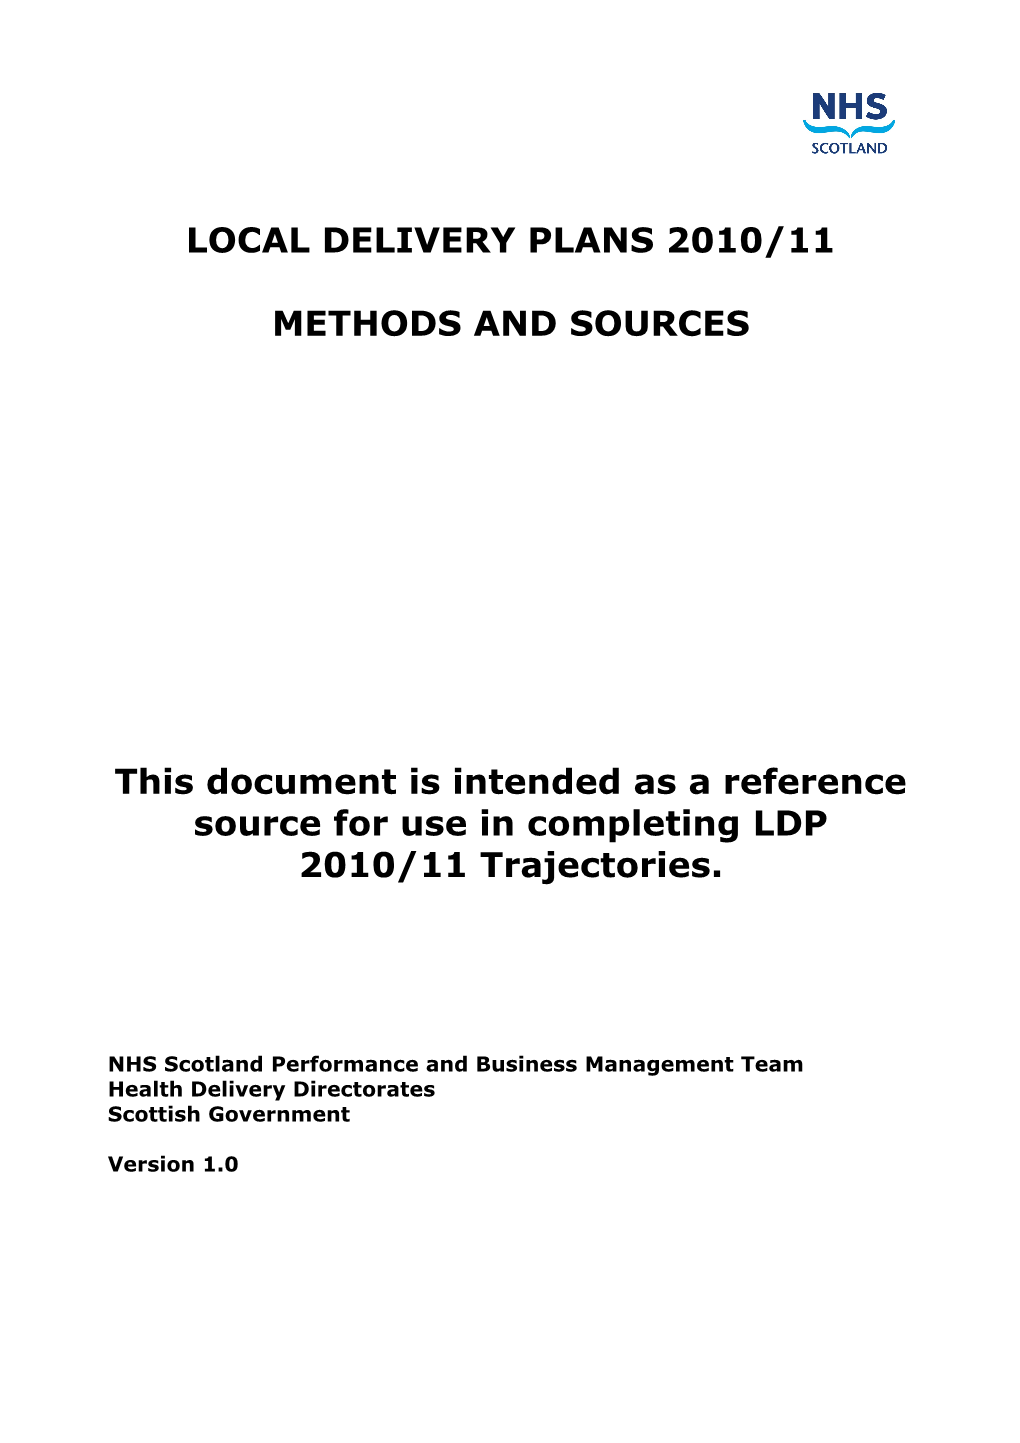 Appendix 2 LDP Methods and Sources